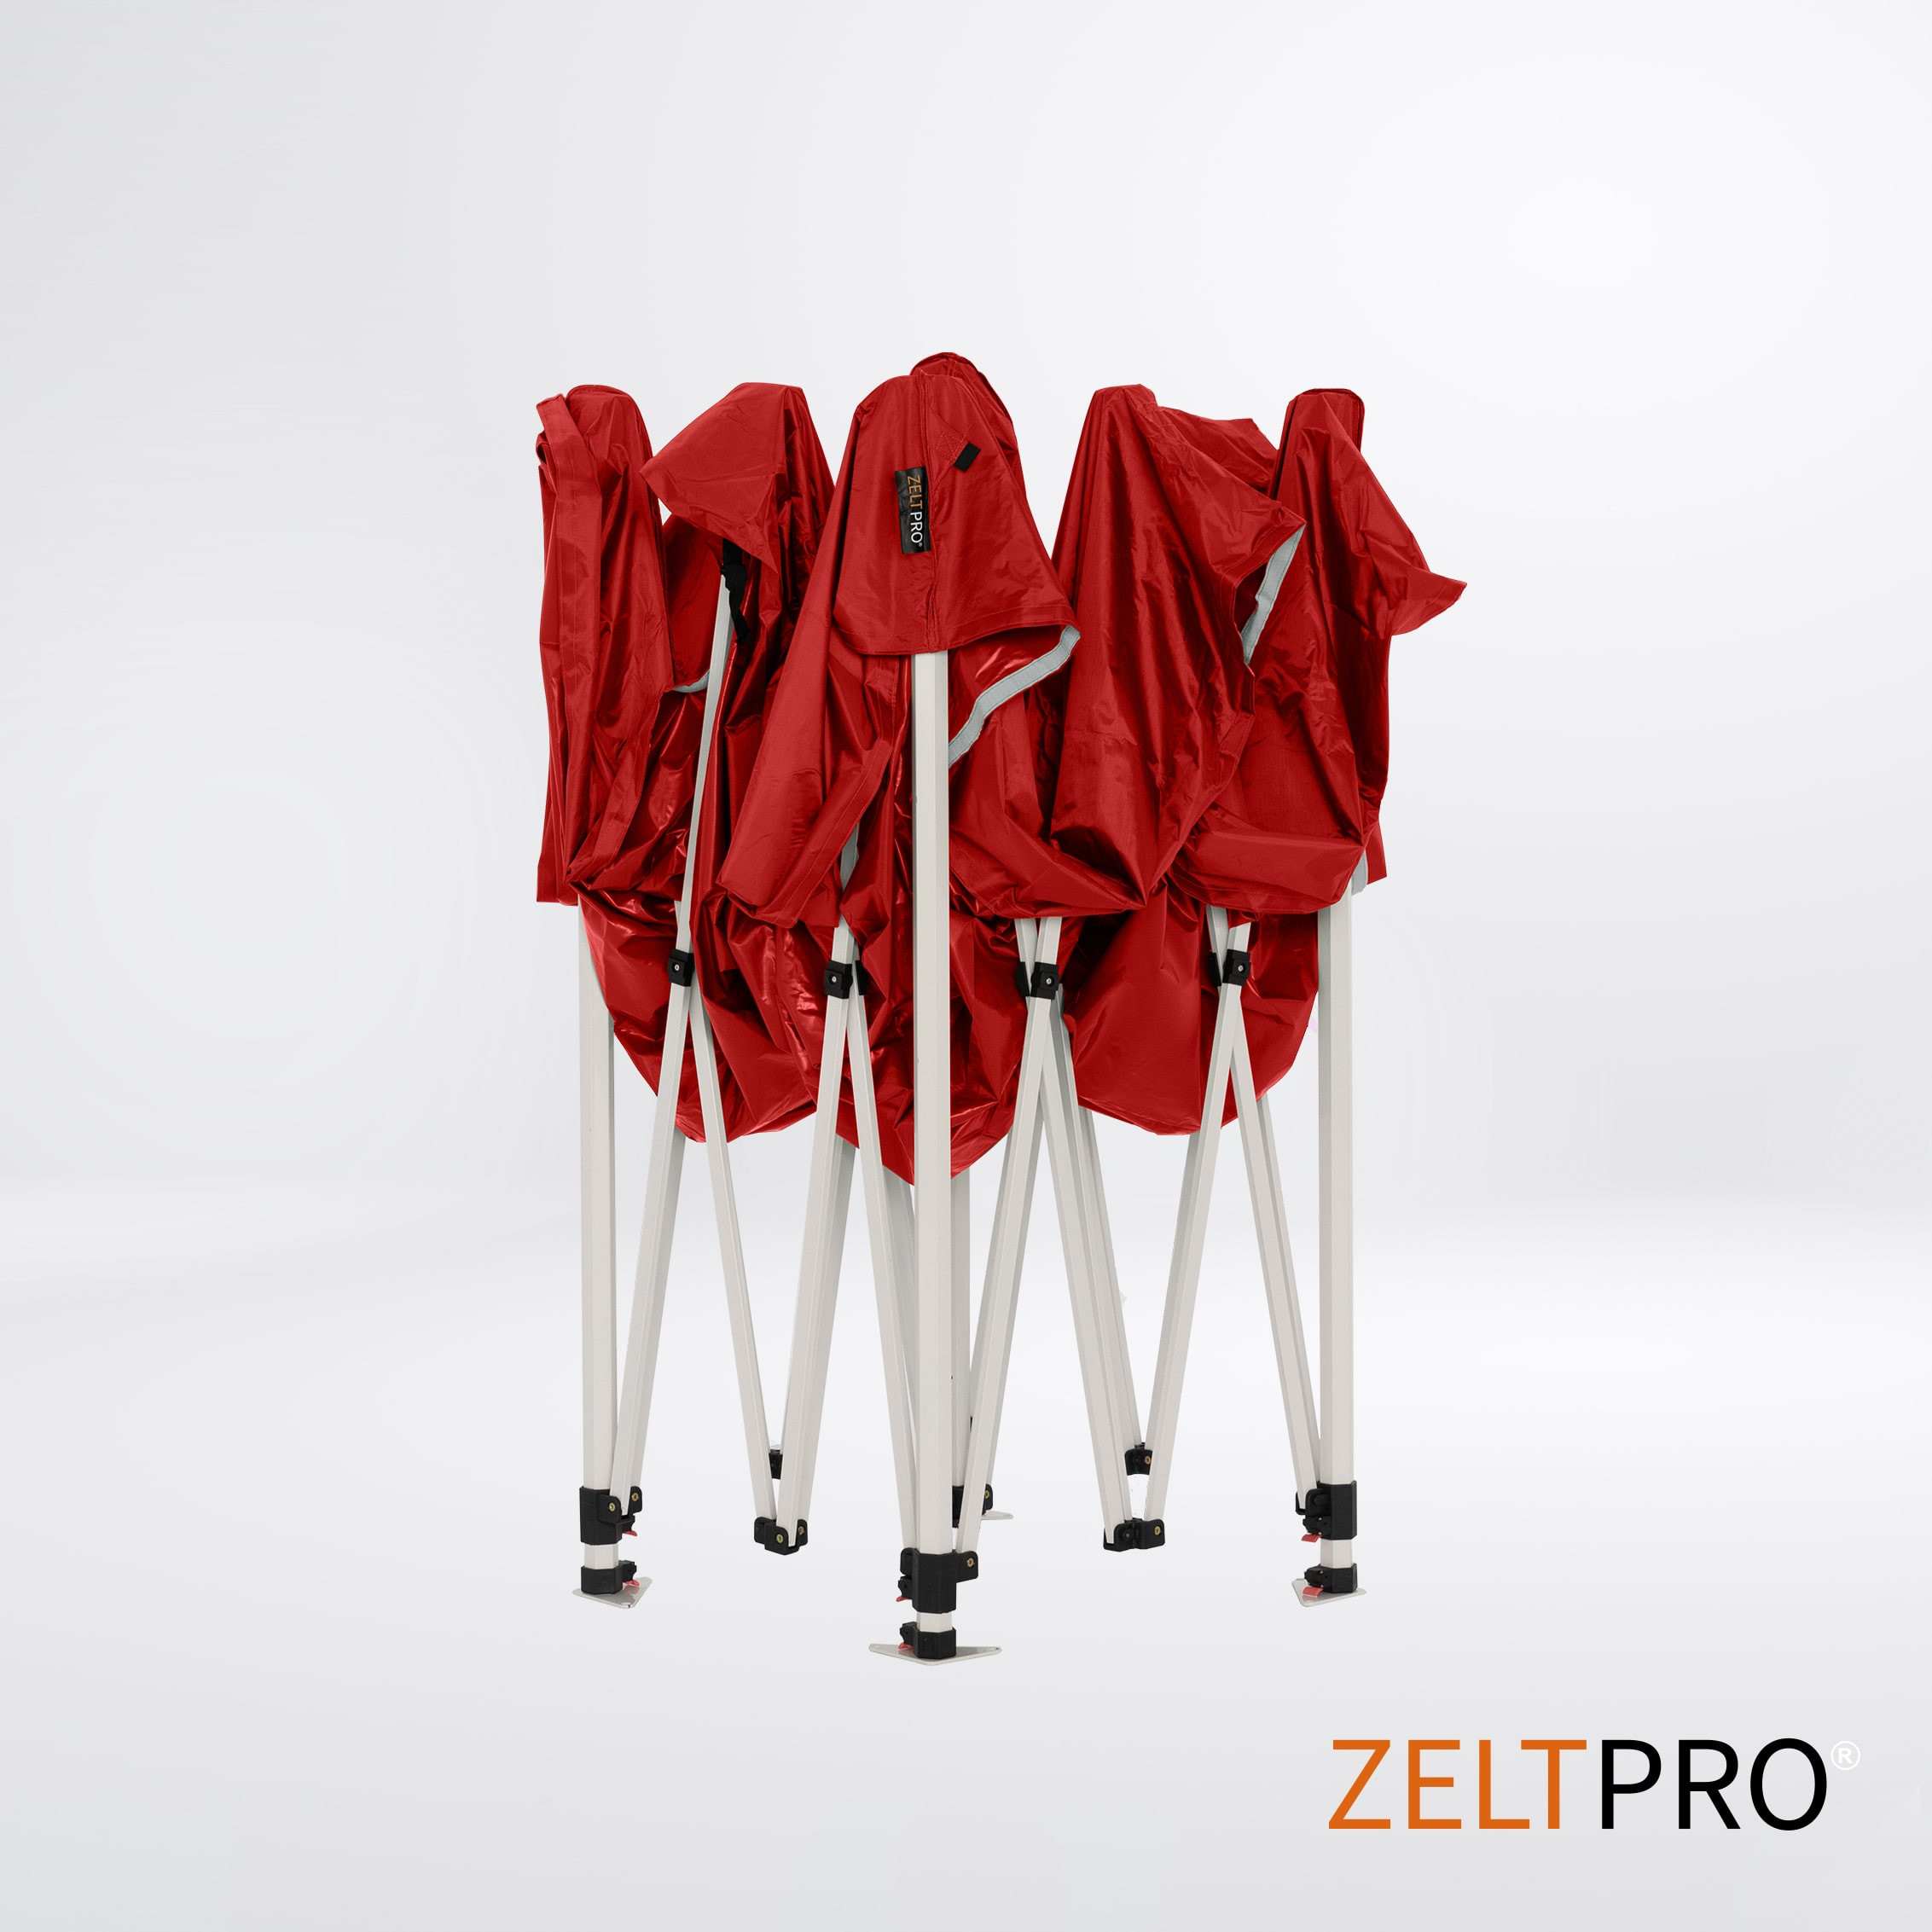 Pop-up telk 2x2 punane Zeltpro PROFRAME